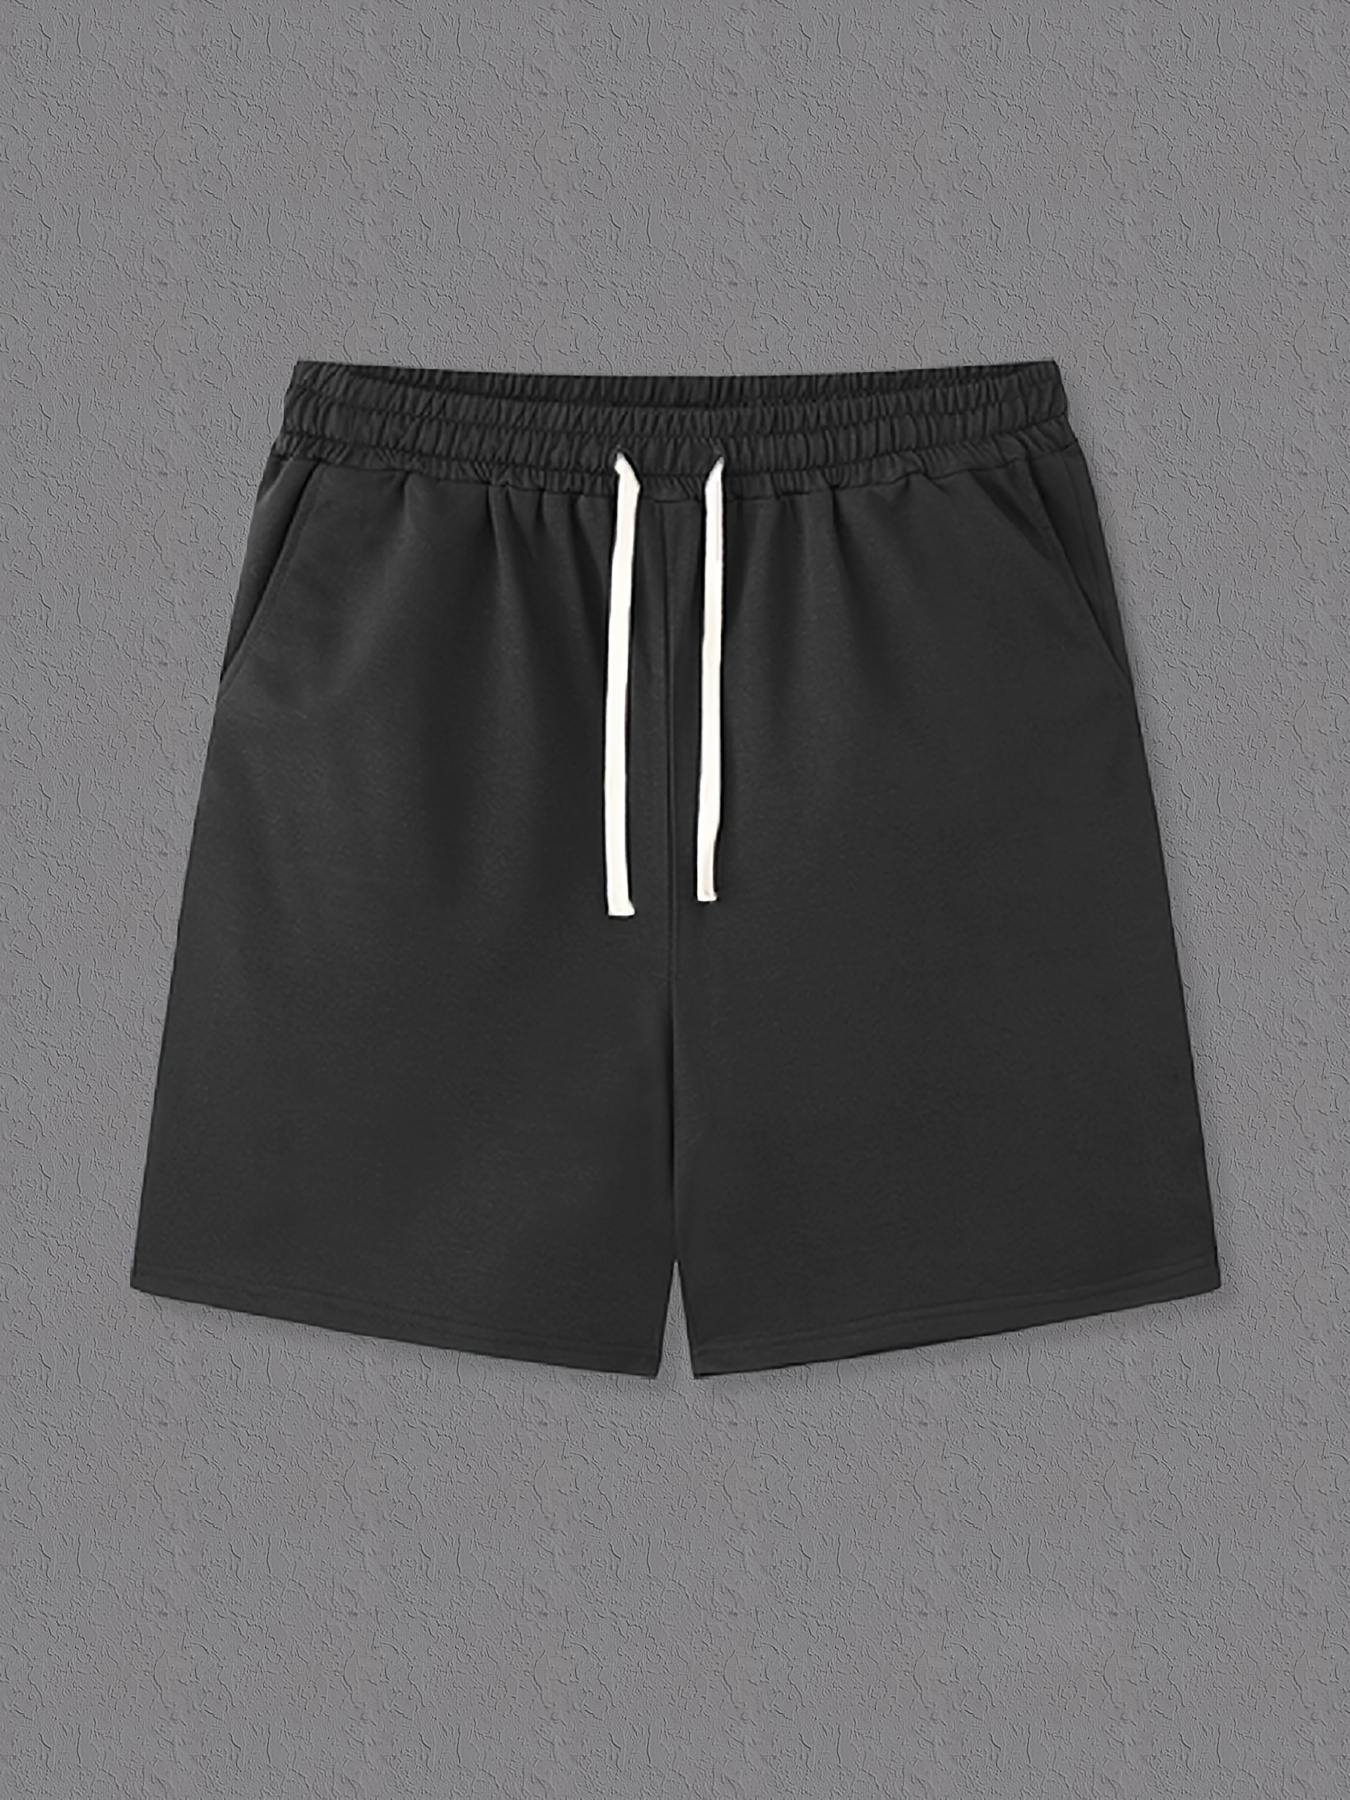 Black Classic Sports Shorts